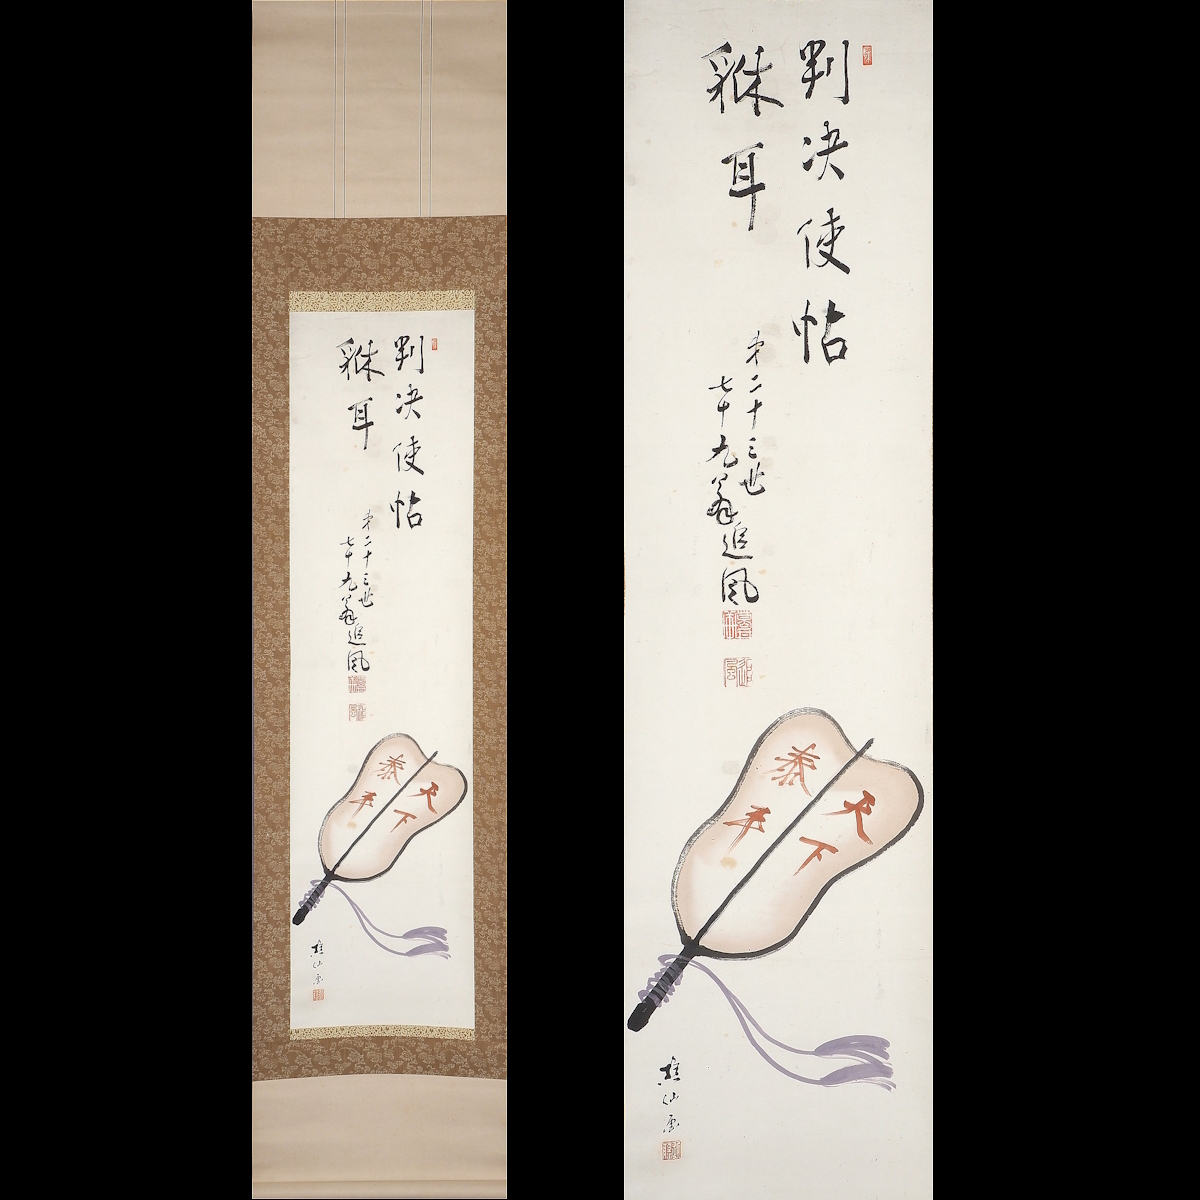 [Auténtico] [Watarikan] [Yoshida Oikaze, Kondo Shosen] 11092 Pergamino colgante, inscripción de pintura, figura gunbai, caja, papel, Kumamoto, árbitro de sumo, inscrito, Cuadro, pintura japonesa, otros